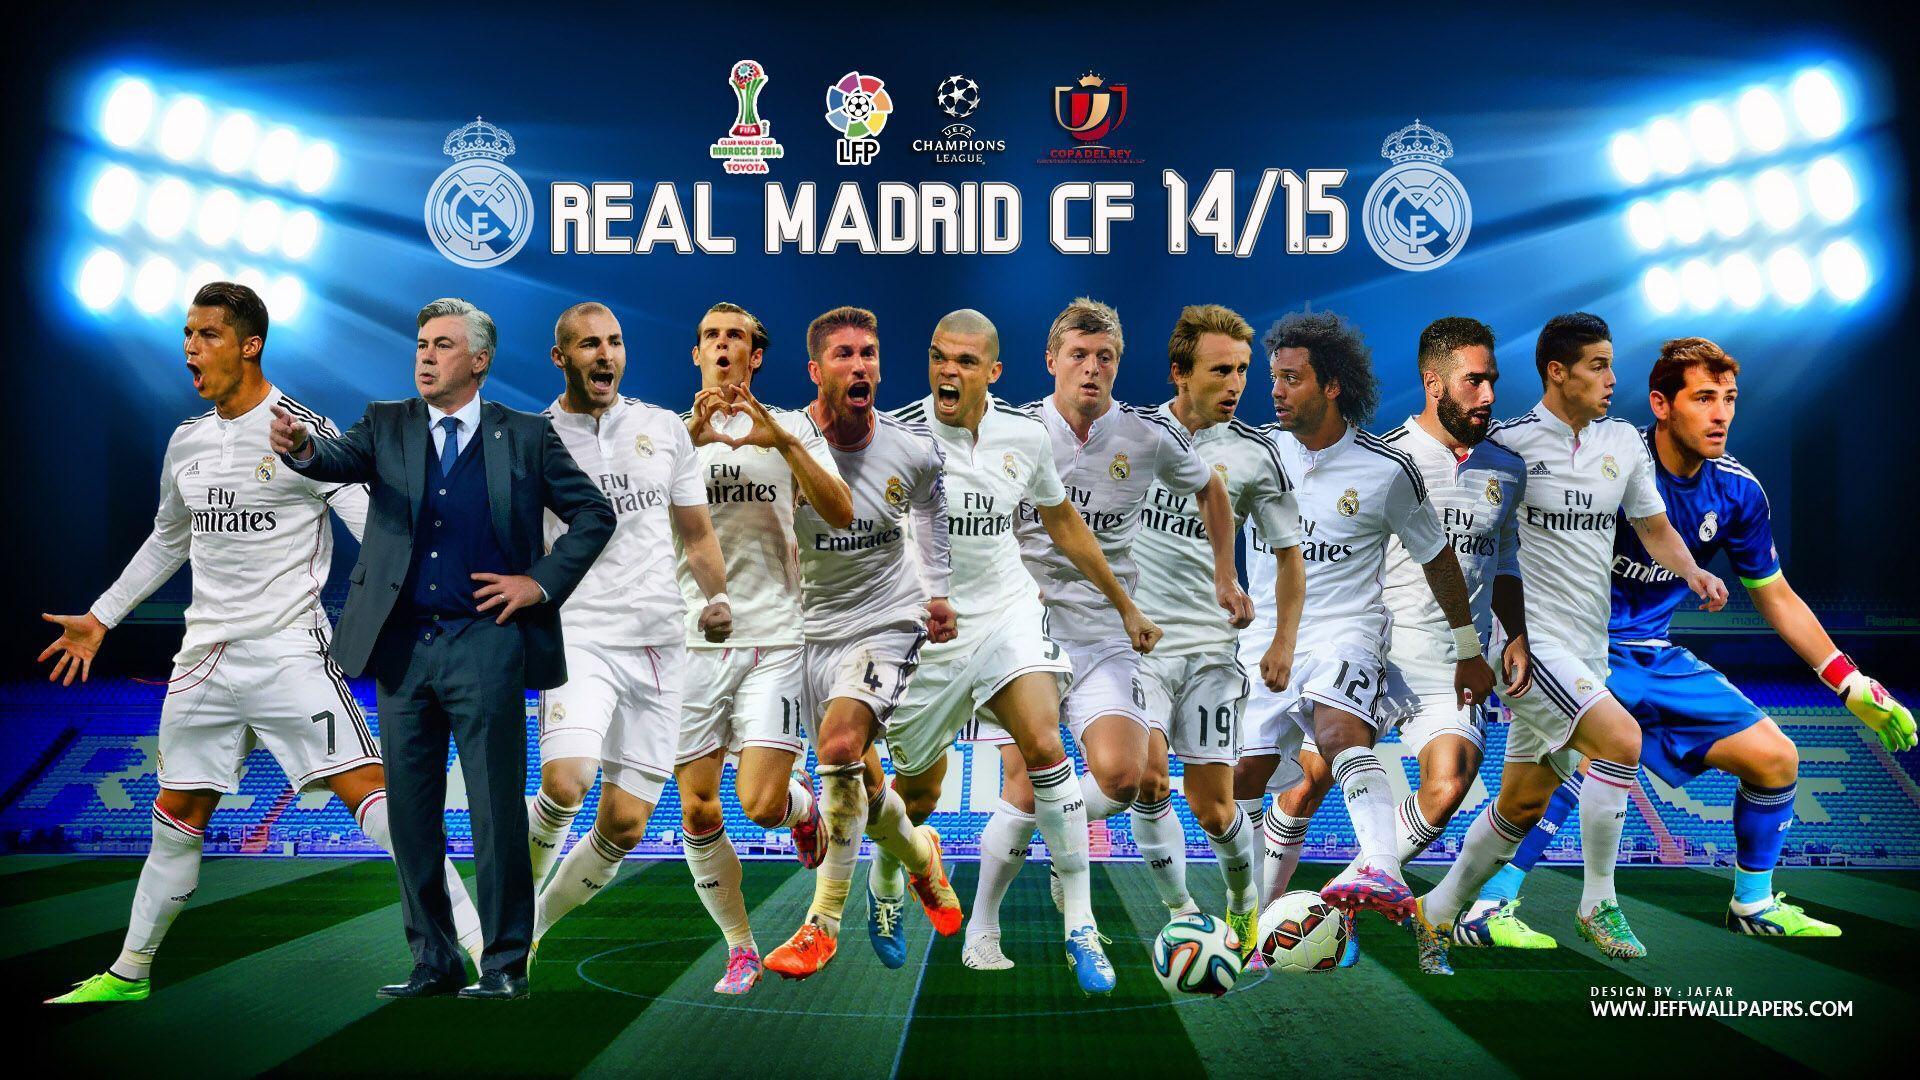 Real Madrid Wallpaper 2015 HD